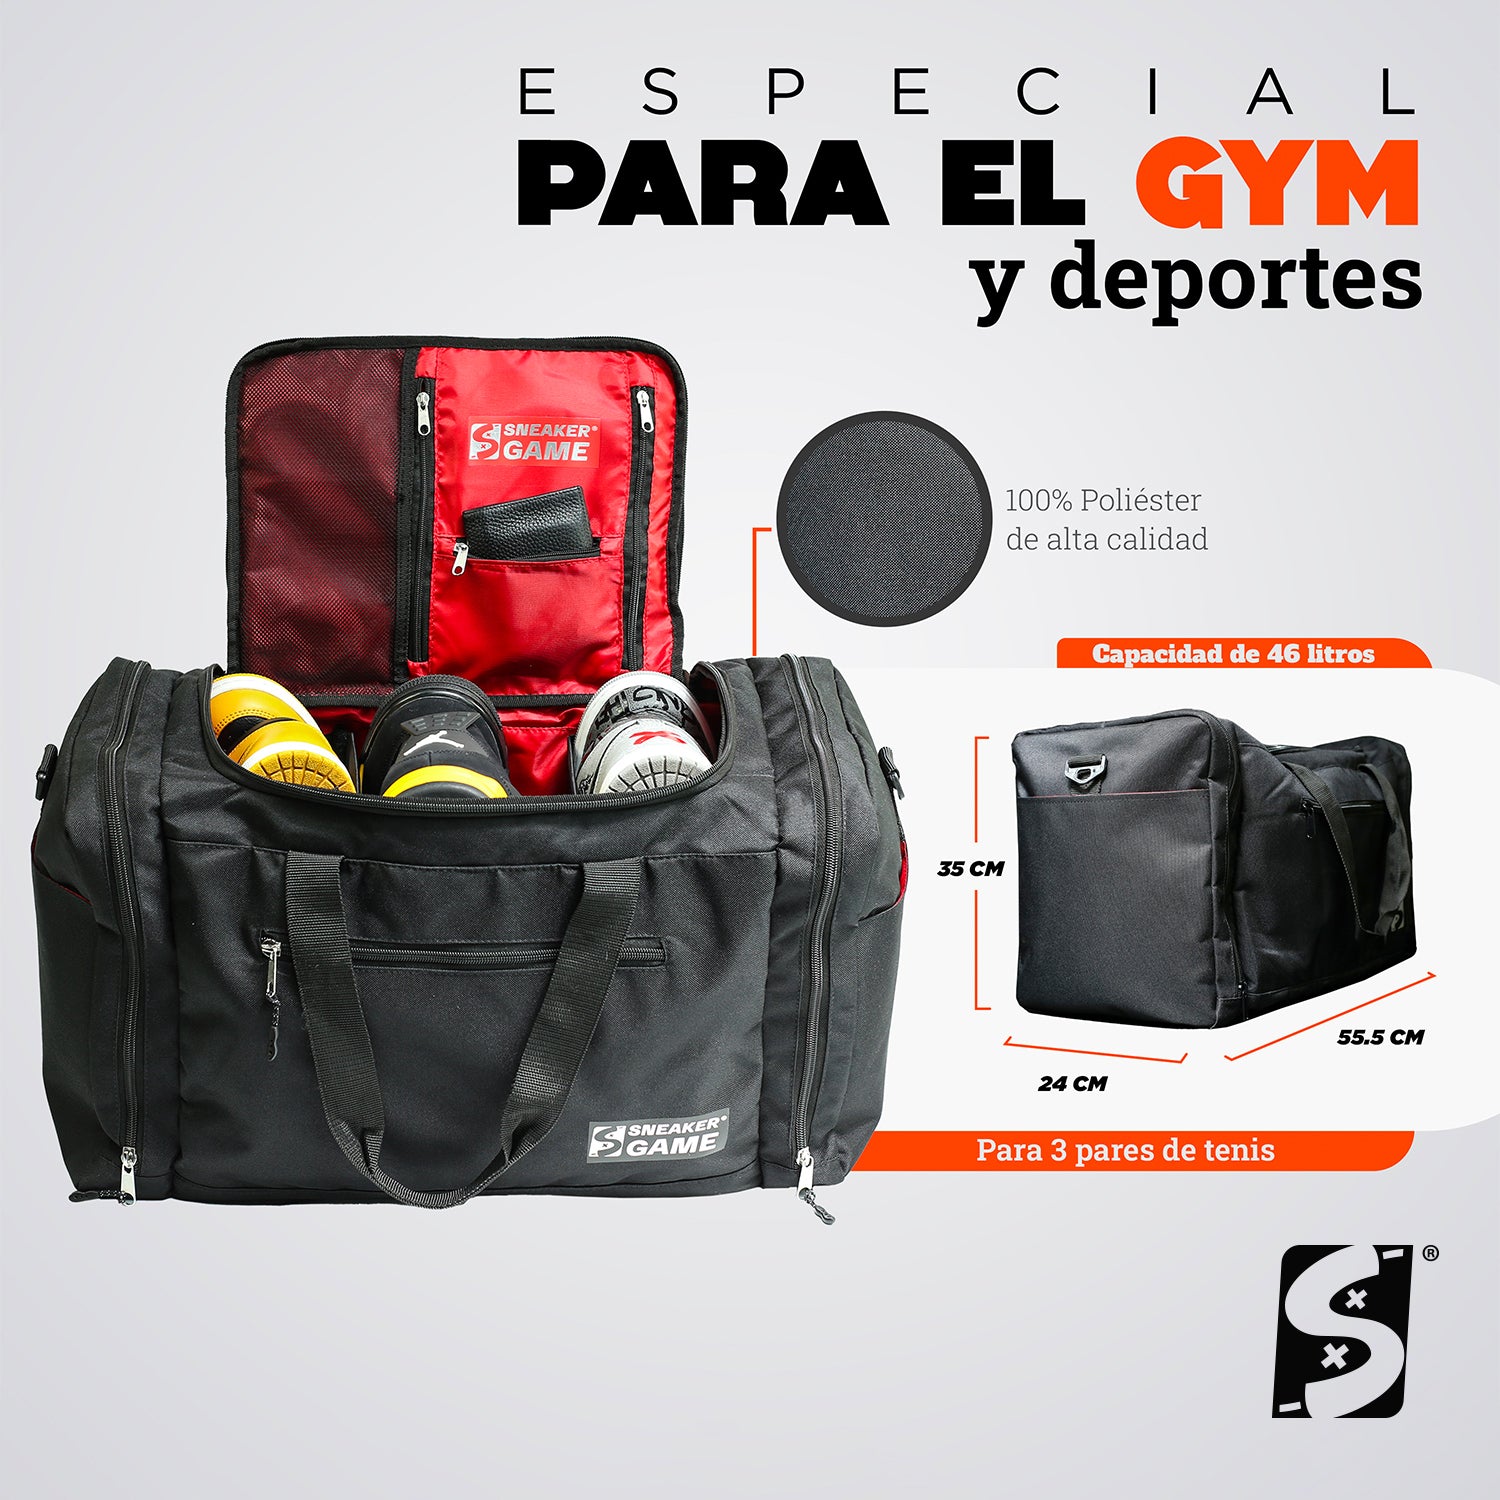 Maleta Deportiva Mochila Viaje Grande Gym Entrenamiento Laptop Ropa Cámara Zapatos Hombre Mujer Repelente Agua 10 Espacios Para 3 Snkrs 46 lts Dunker